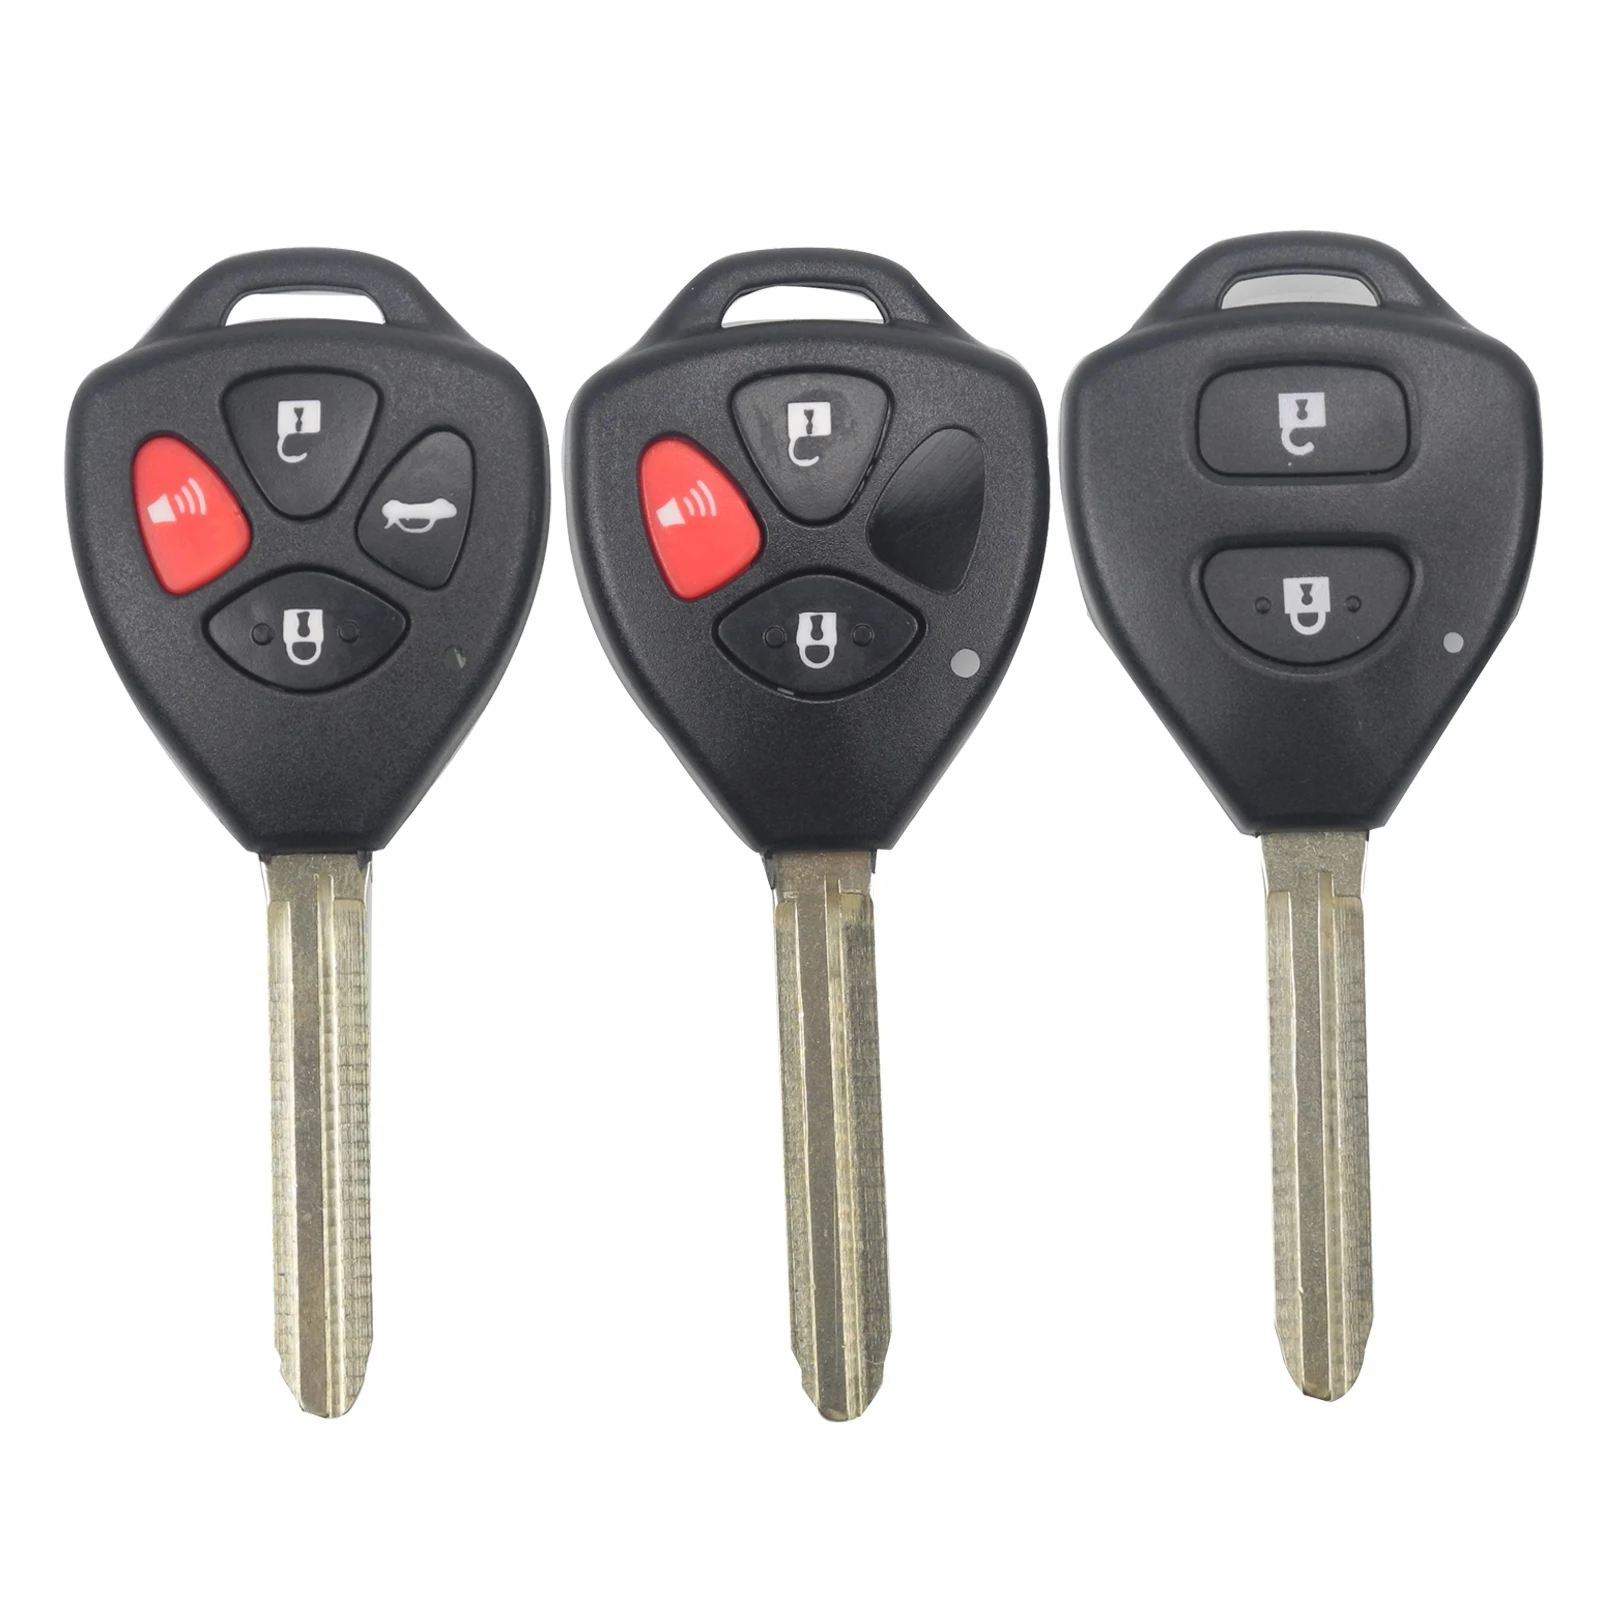 Car Key Shell Replacement Fob Uncut Remote Key Shell Case For Toyota RAV4 Yaris Venza Scion tC/xA/xB/xC 2/3/4 Buttons